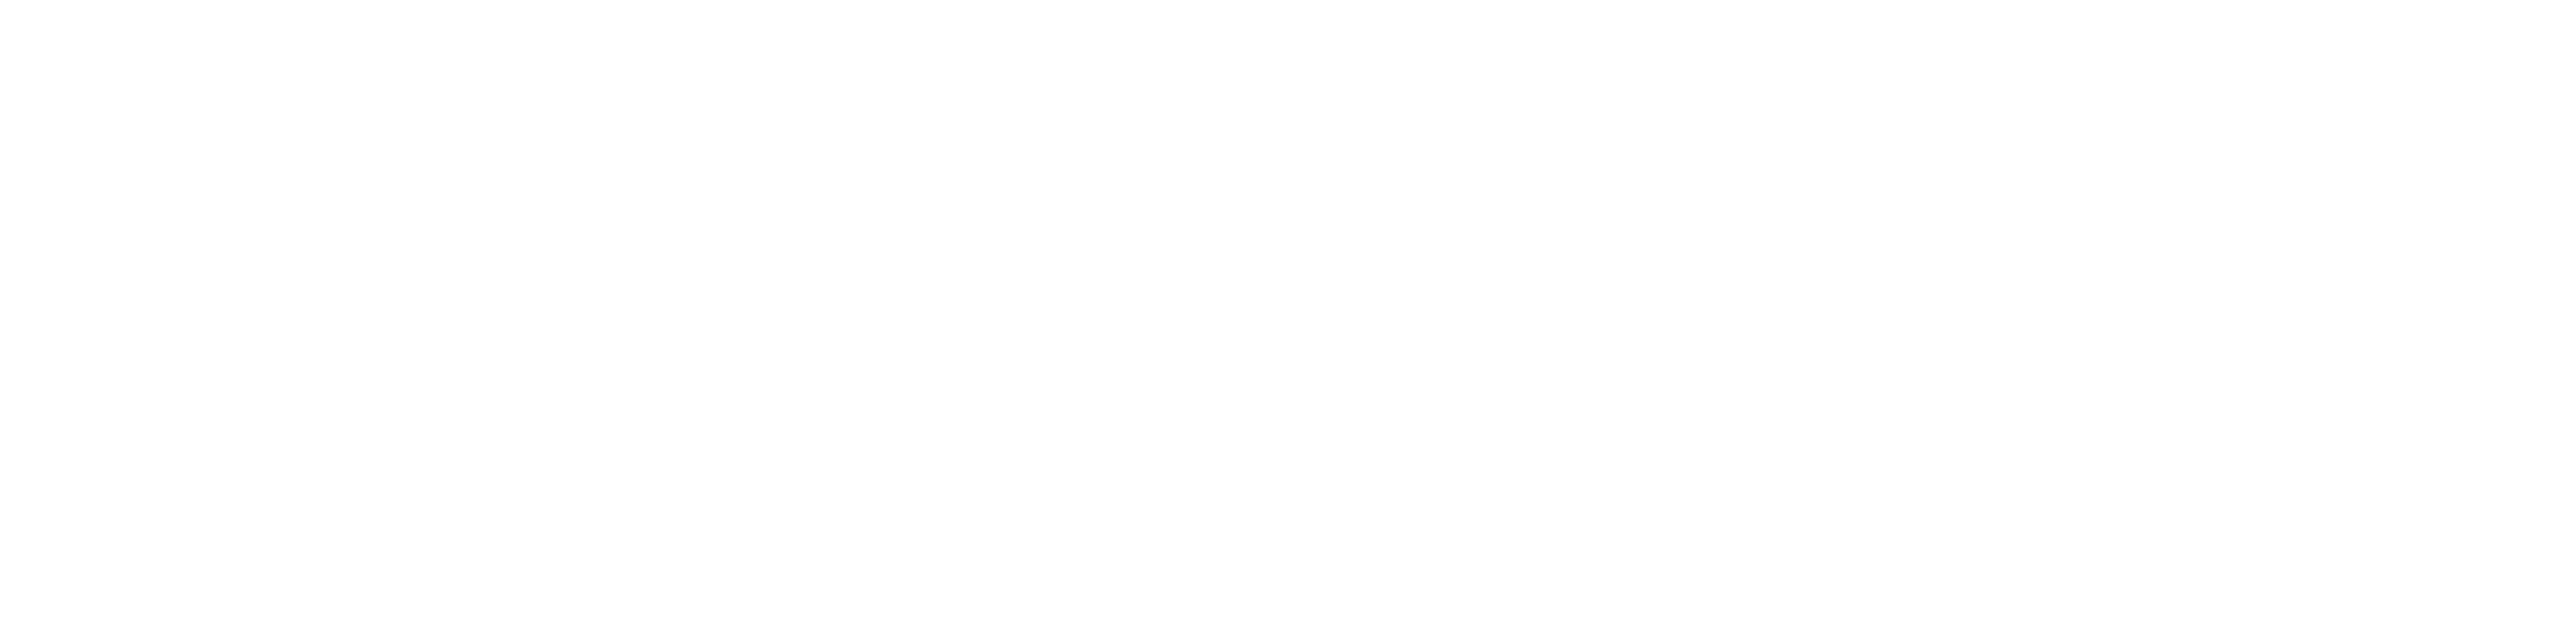 Båstad Tourism & Business Negatief logo-42